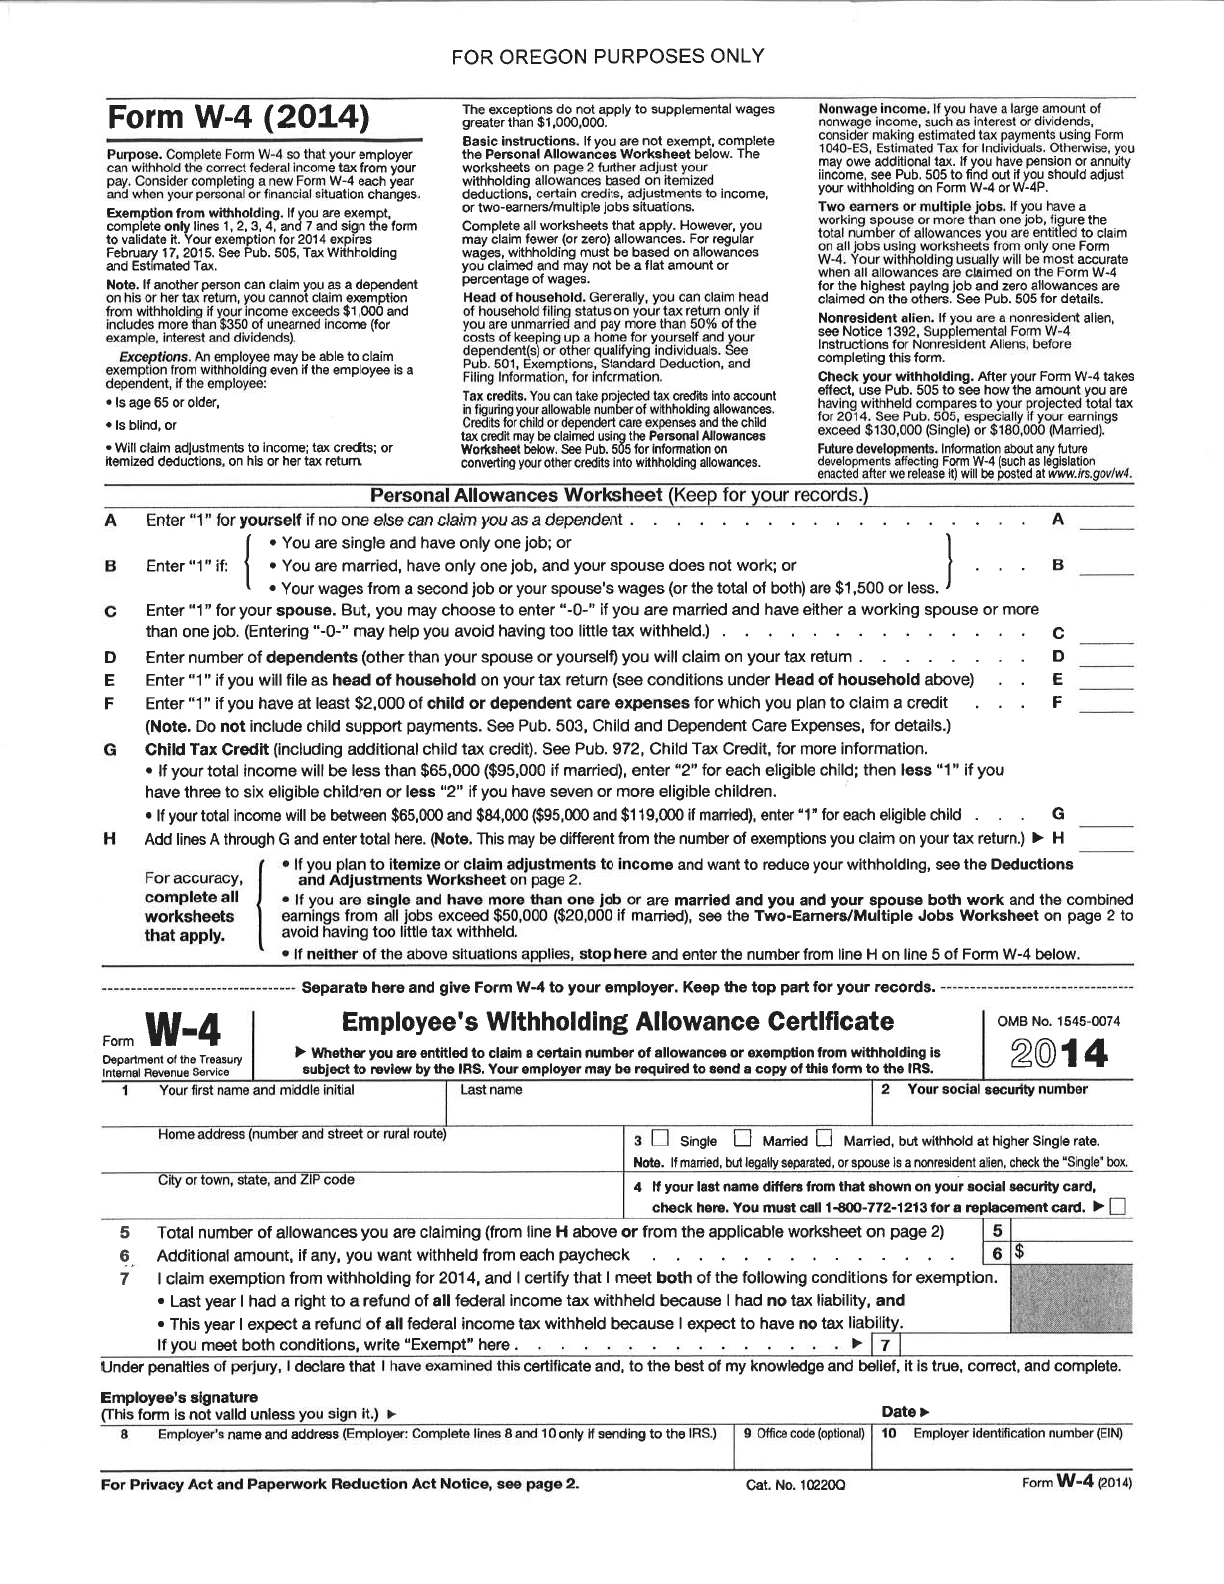 Free Oregon Form W4 (2014) PDF 341KB 1 Page(s)